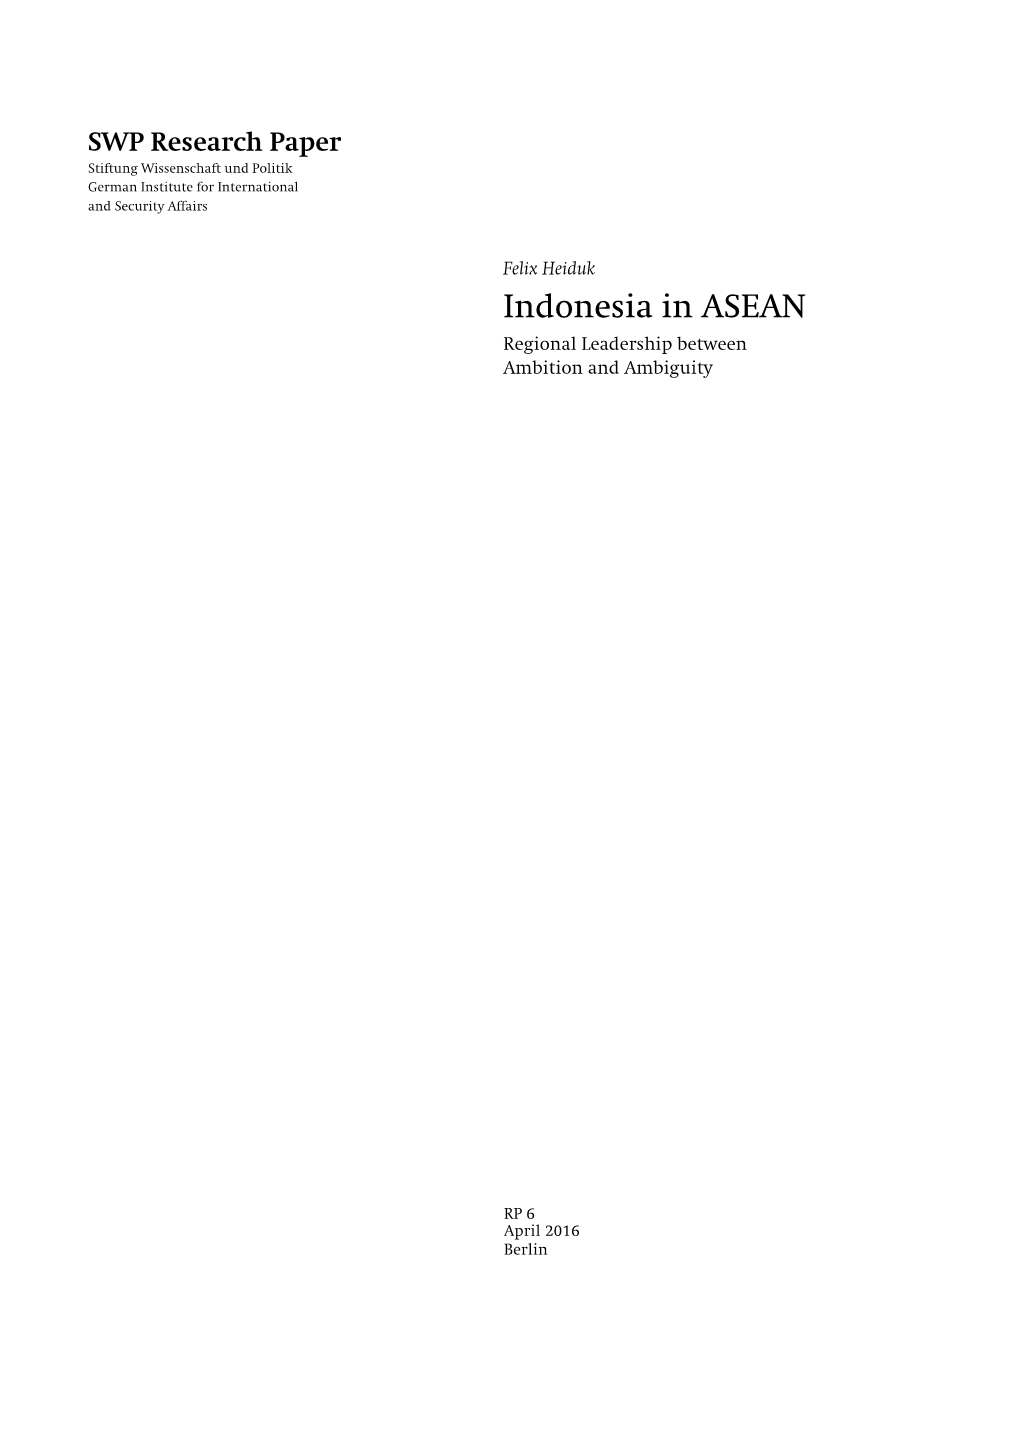 Indonesia in ASEAN. Regional Leadership Between Ambition And